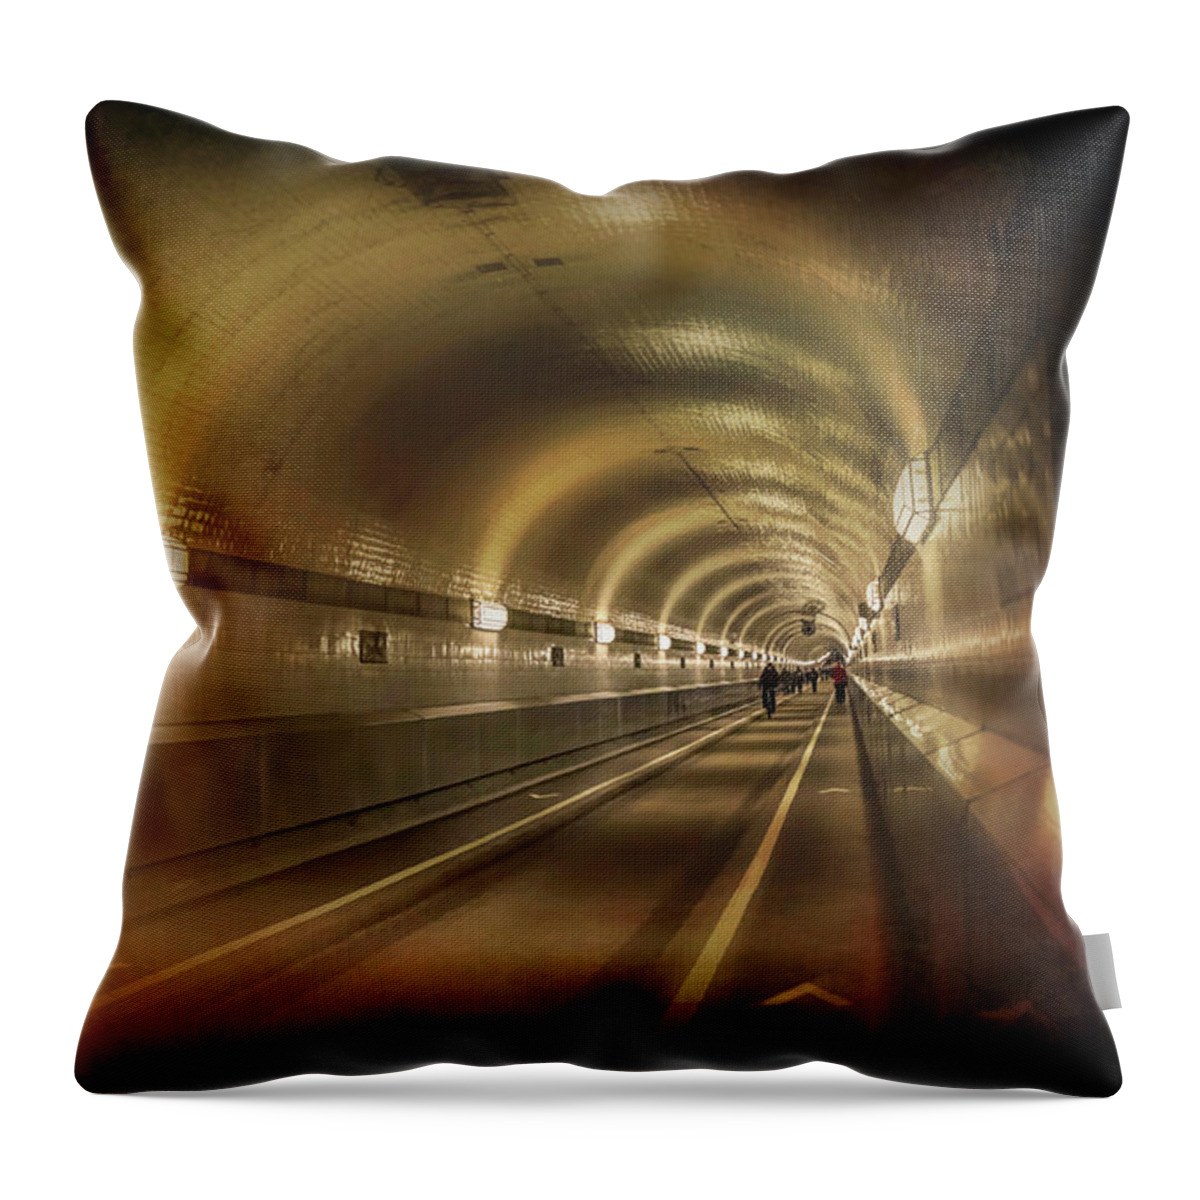 Hamburg Throw Pillow featuring the photograph Old Elbe Tunnel Hamburg by Carol Japp